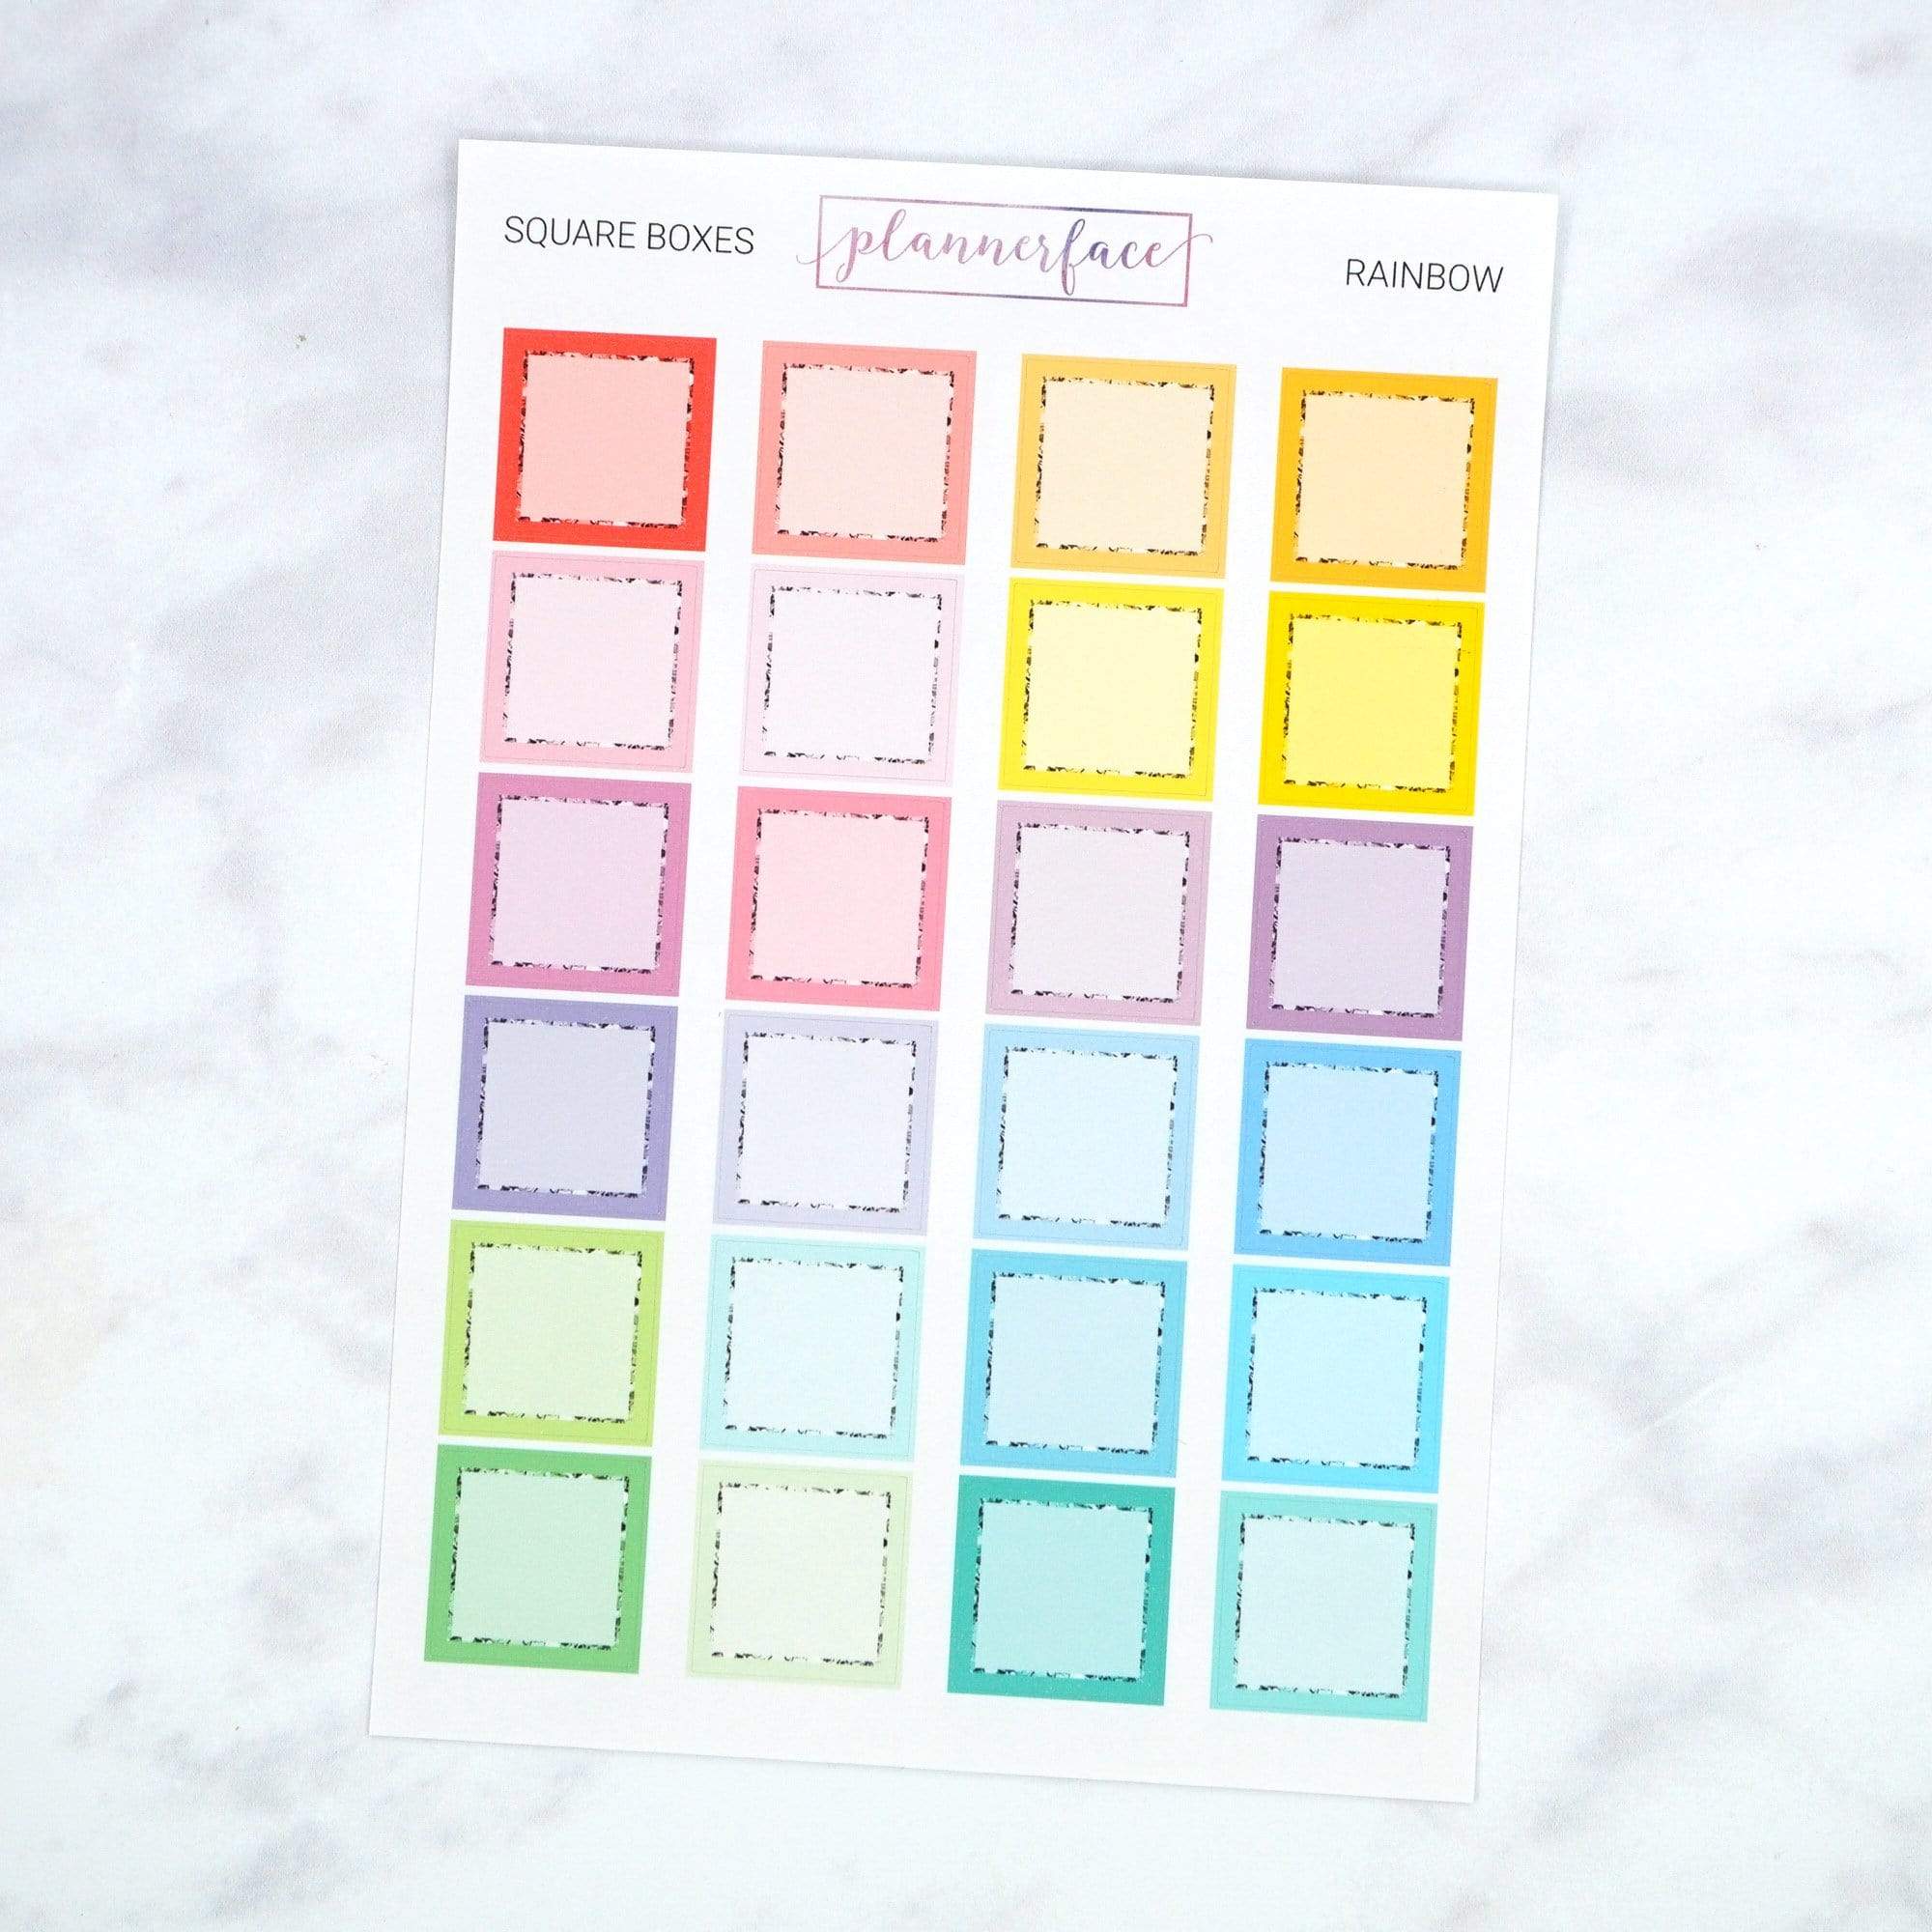 Plannerface Square Boxes | Multicolour Rainbow Planner Stickers